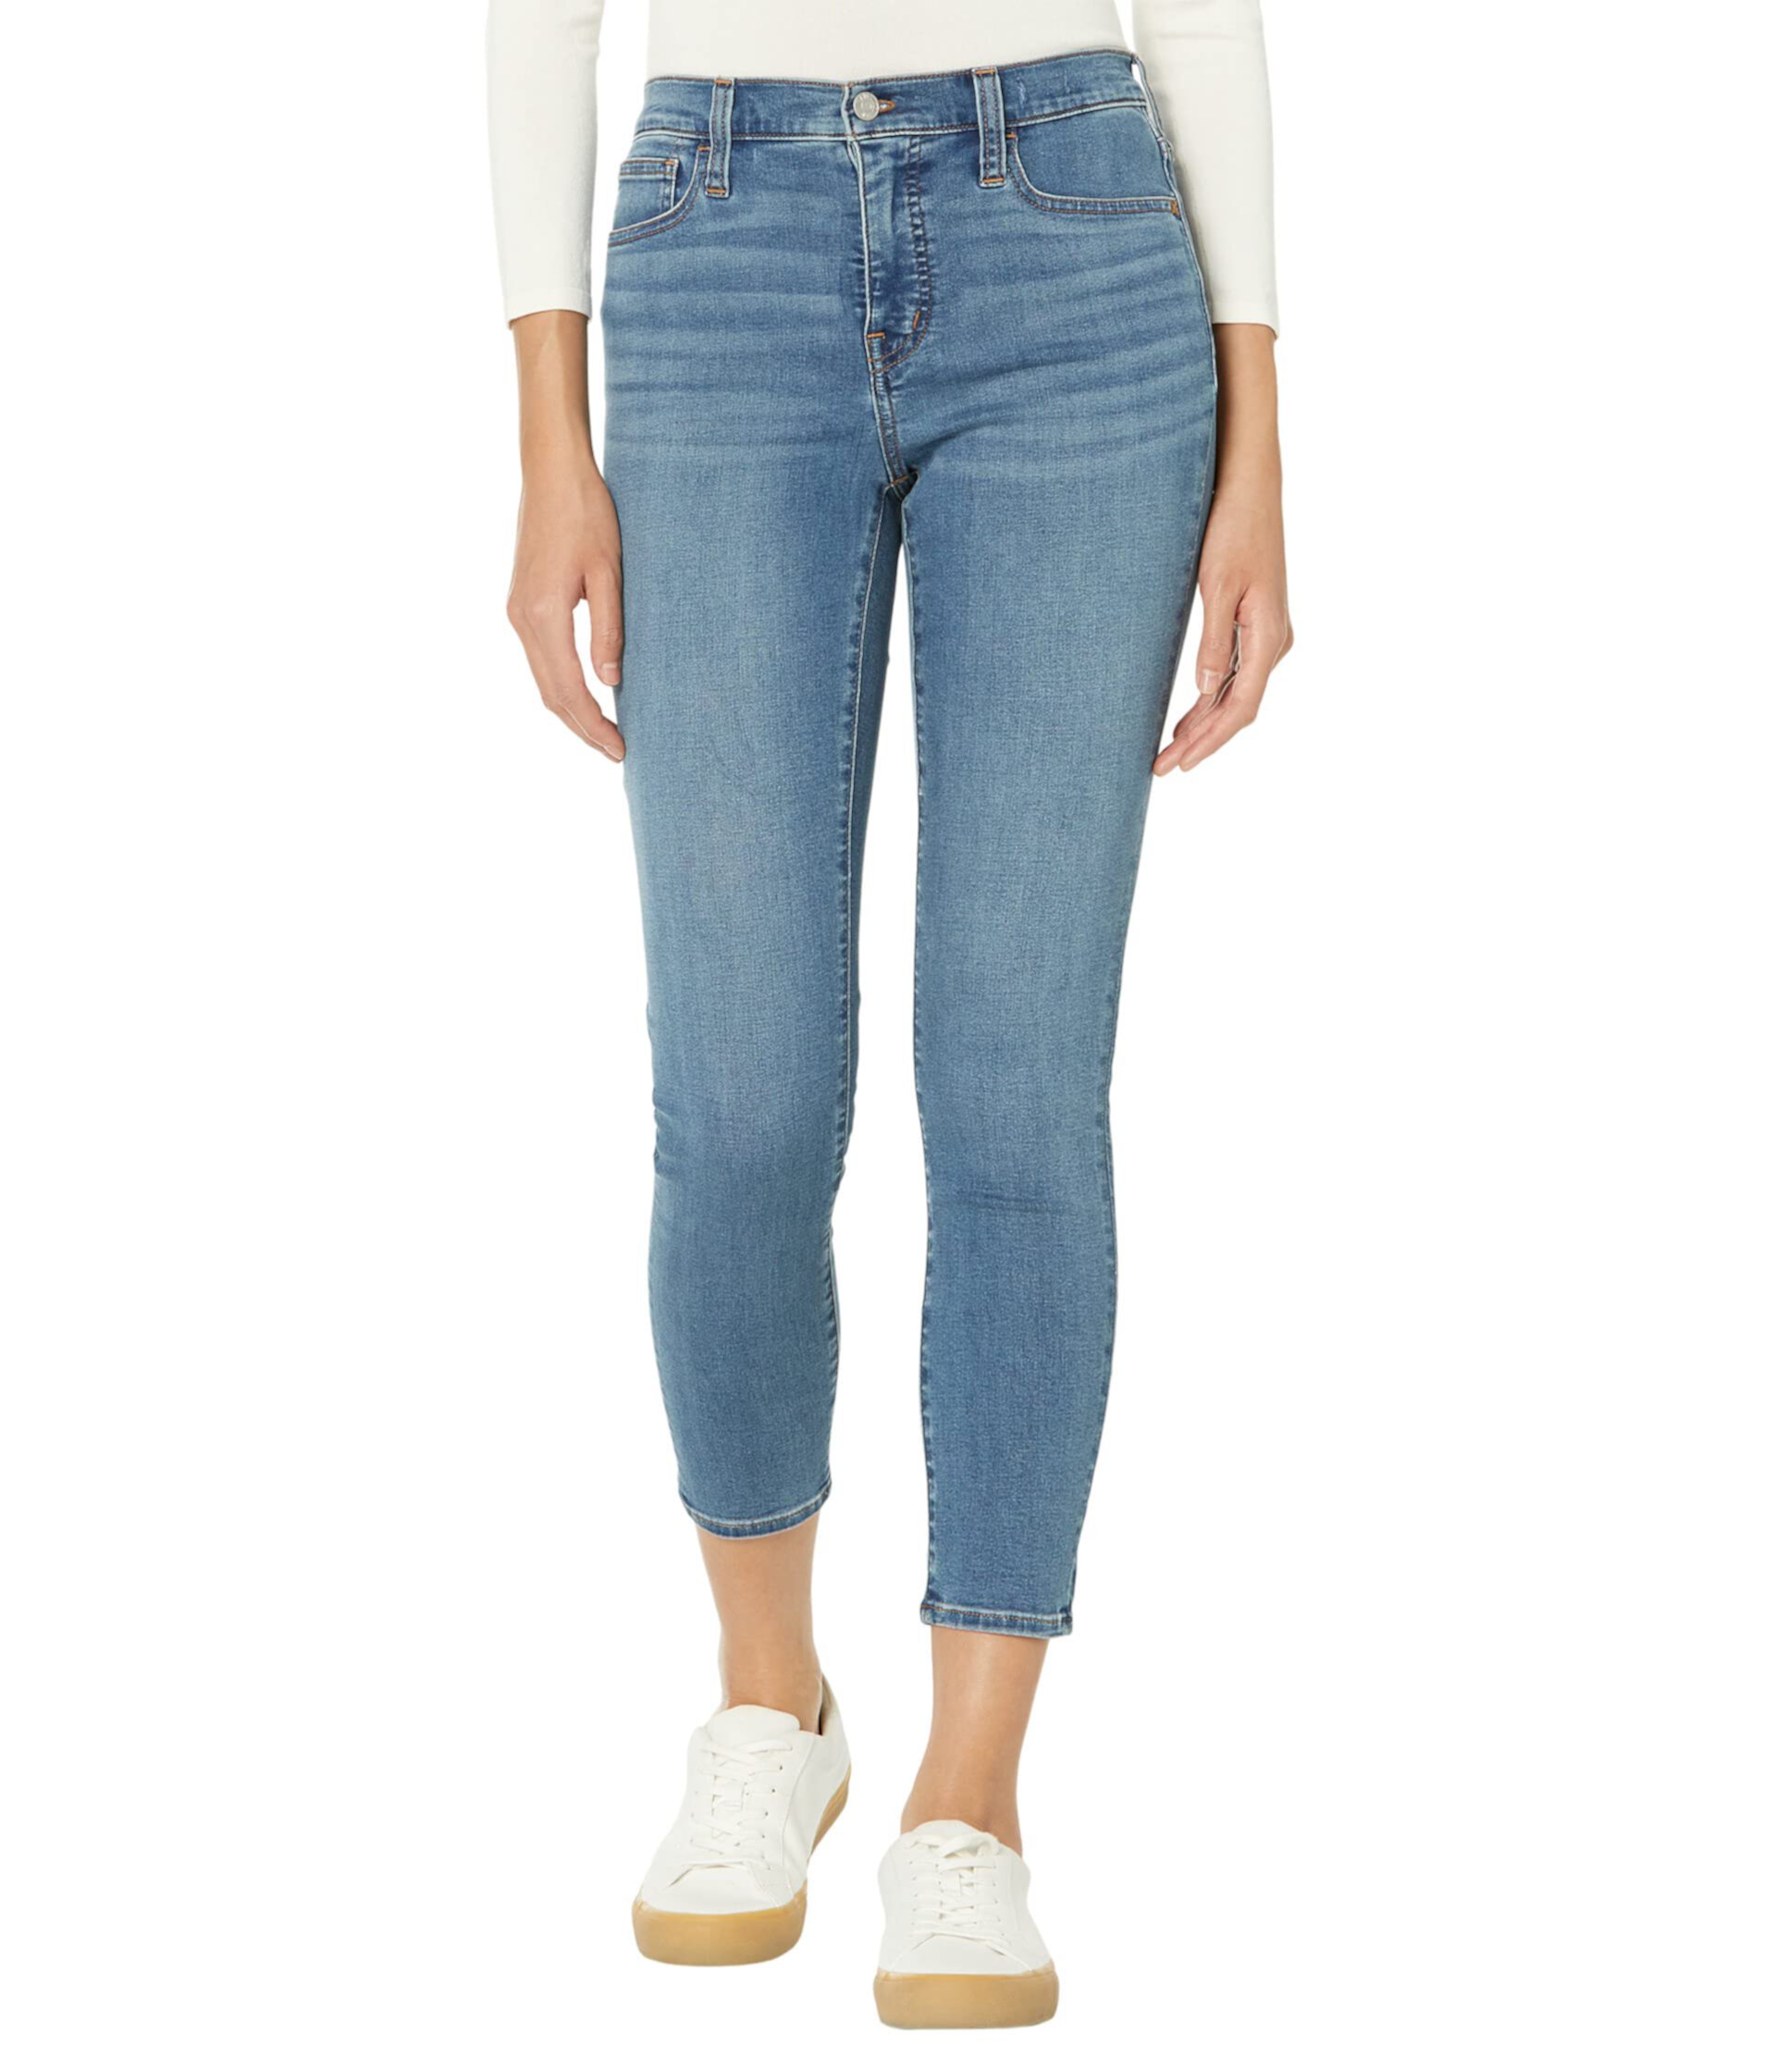 9-дюймовые джинсы Roadtripper цвета Hastings Wash Madewell